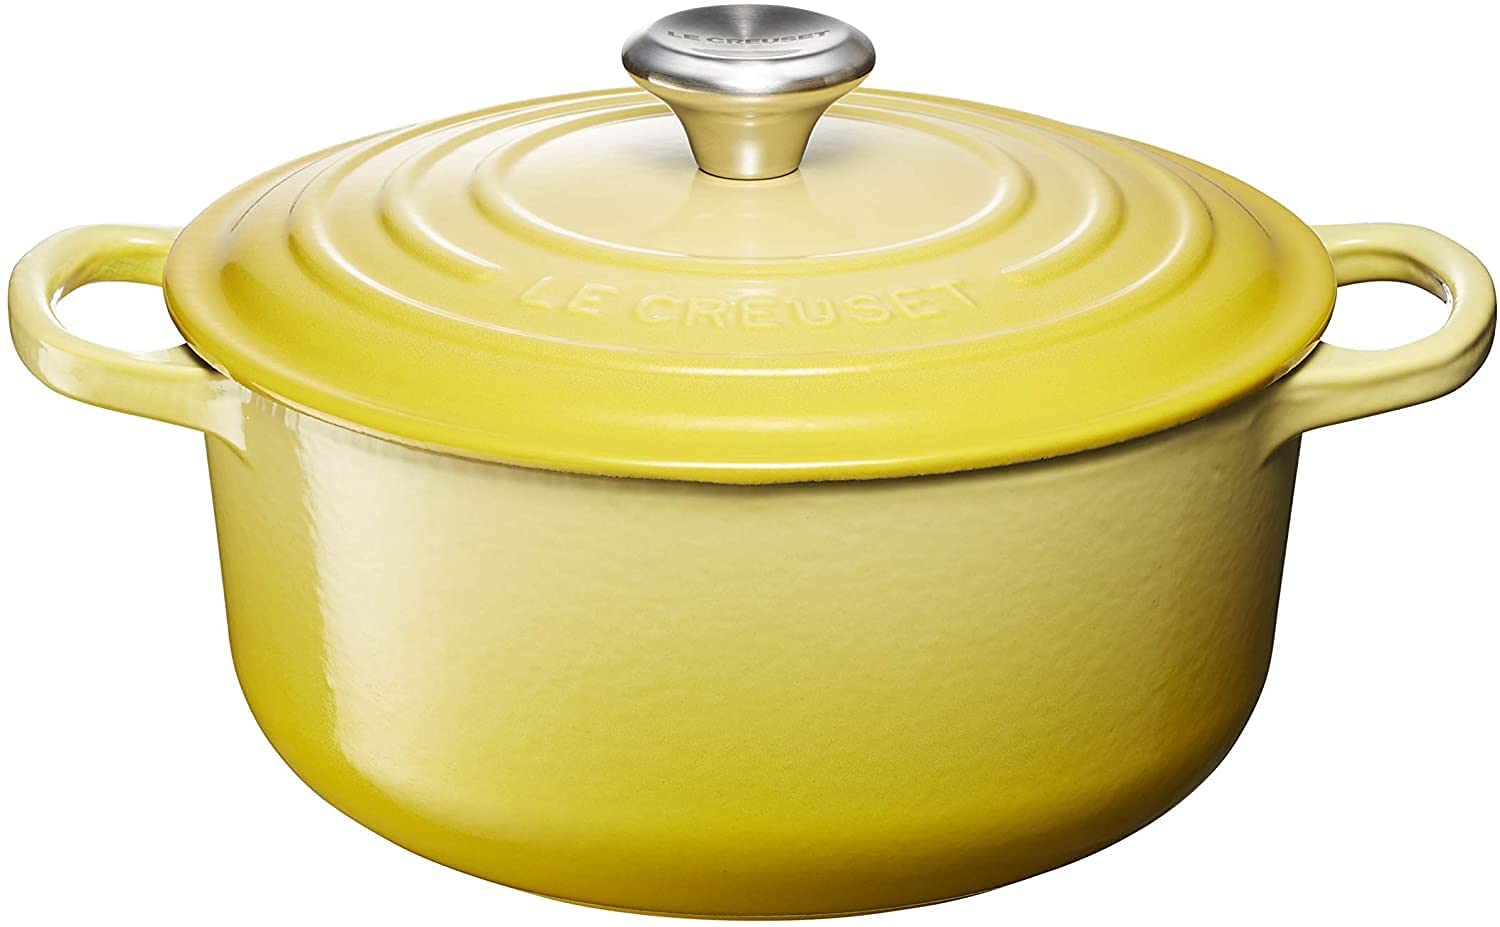 Le Creuset Signature Cast iron-roasting with lid, round - 20cm - yellow / citrus